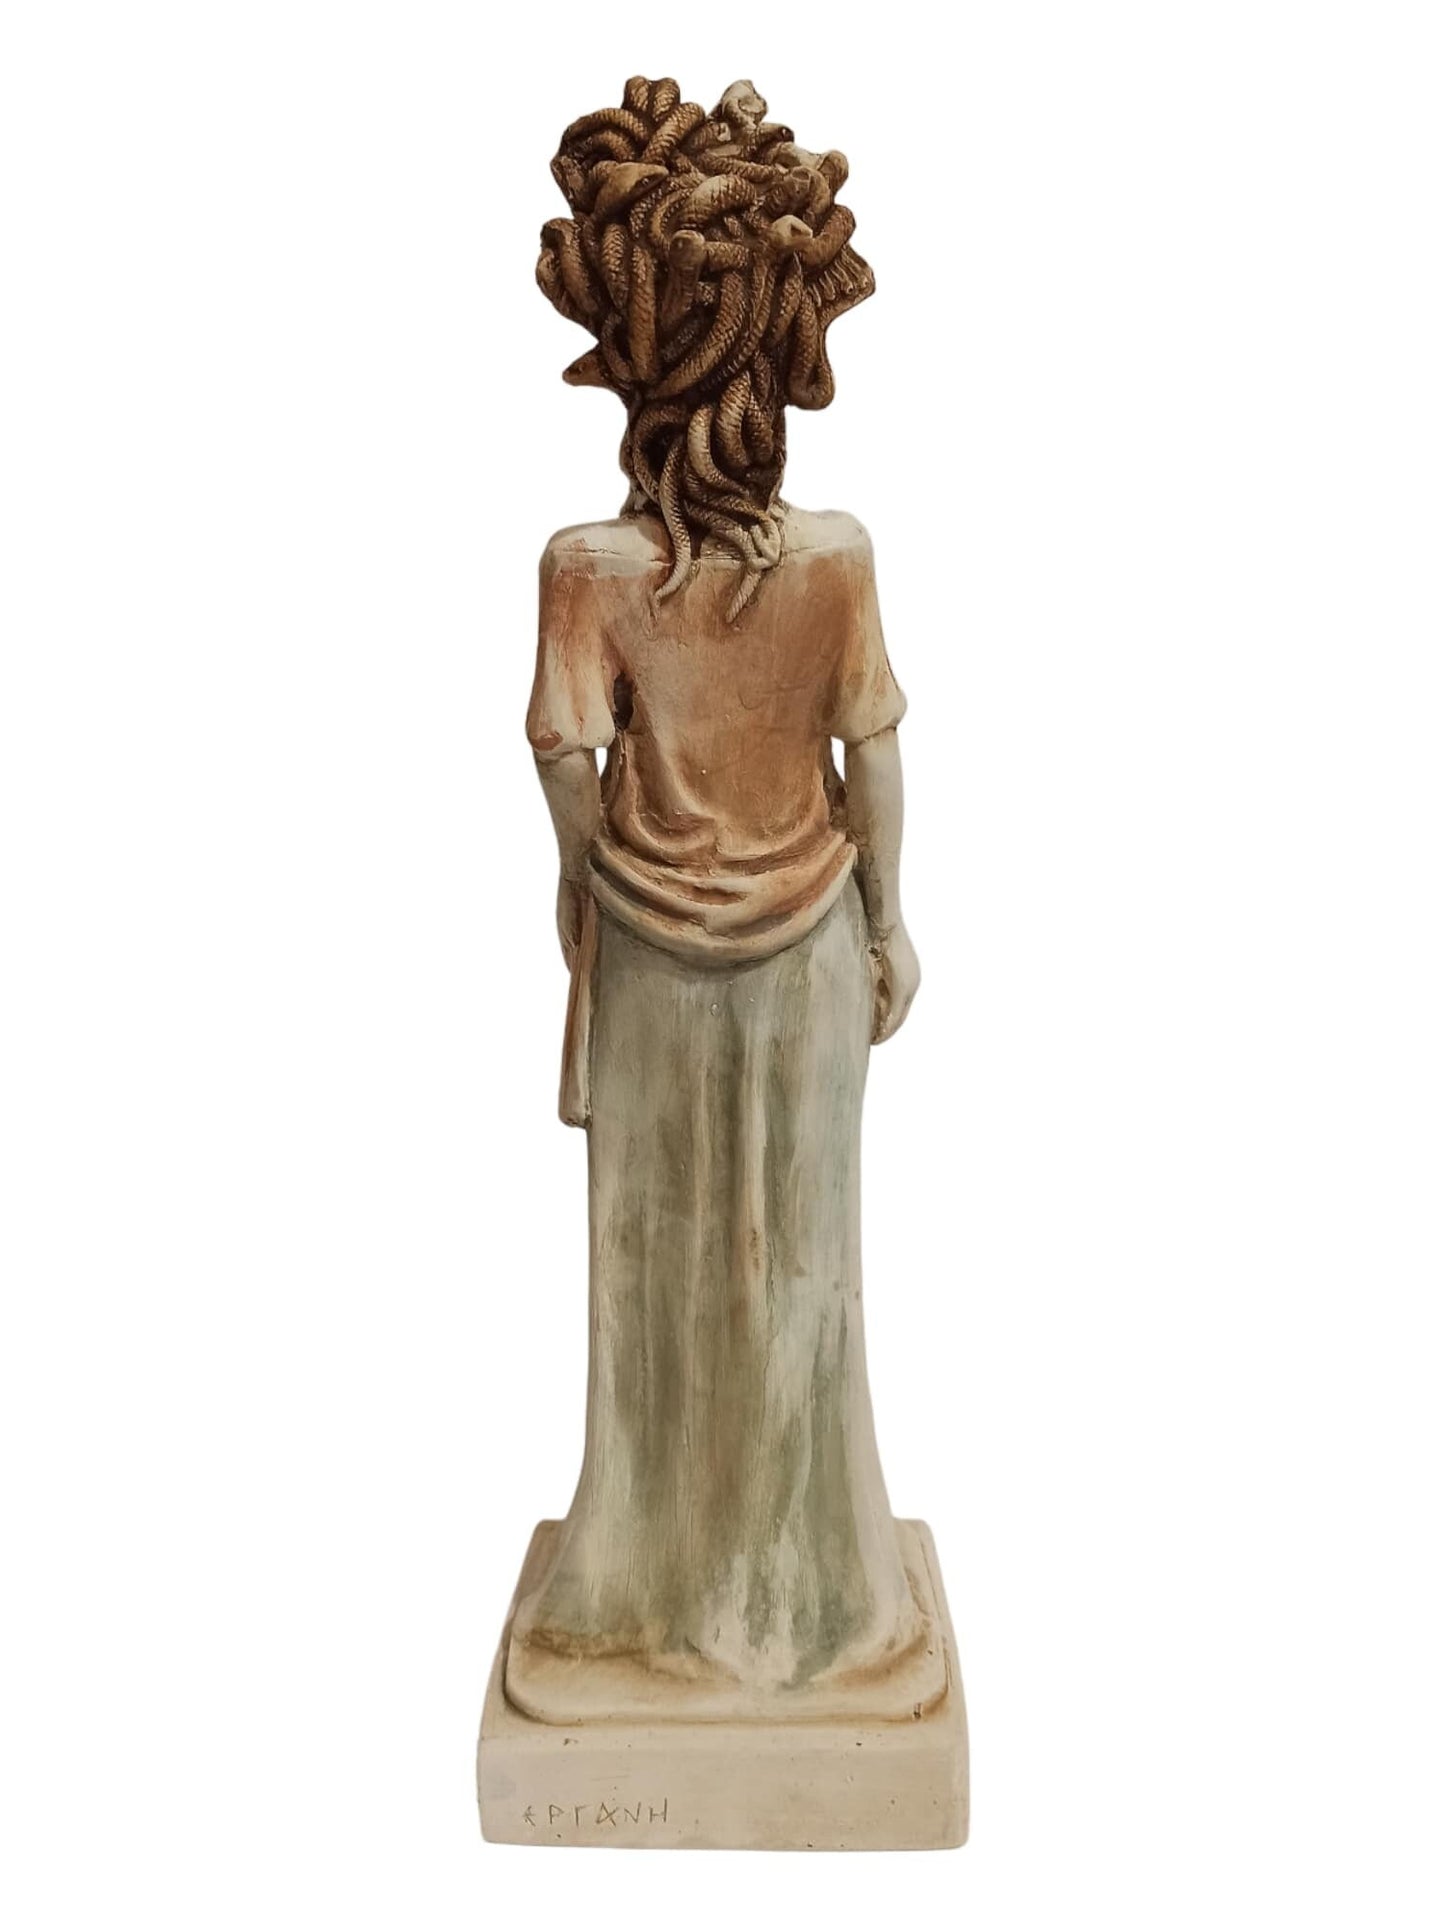 Medusa - Gorgo - Snake-Haired Gorgon - Snake Lady - Monster Figure - Perseus and Goddess Athena Myth - Casting Stone